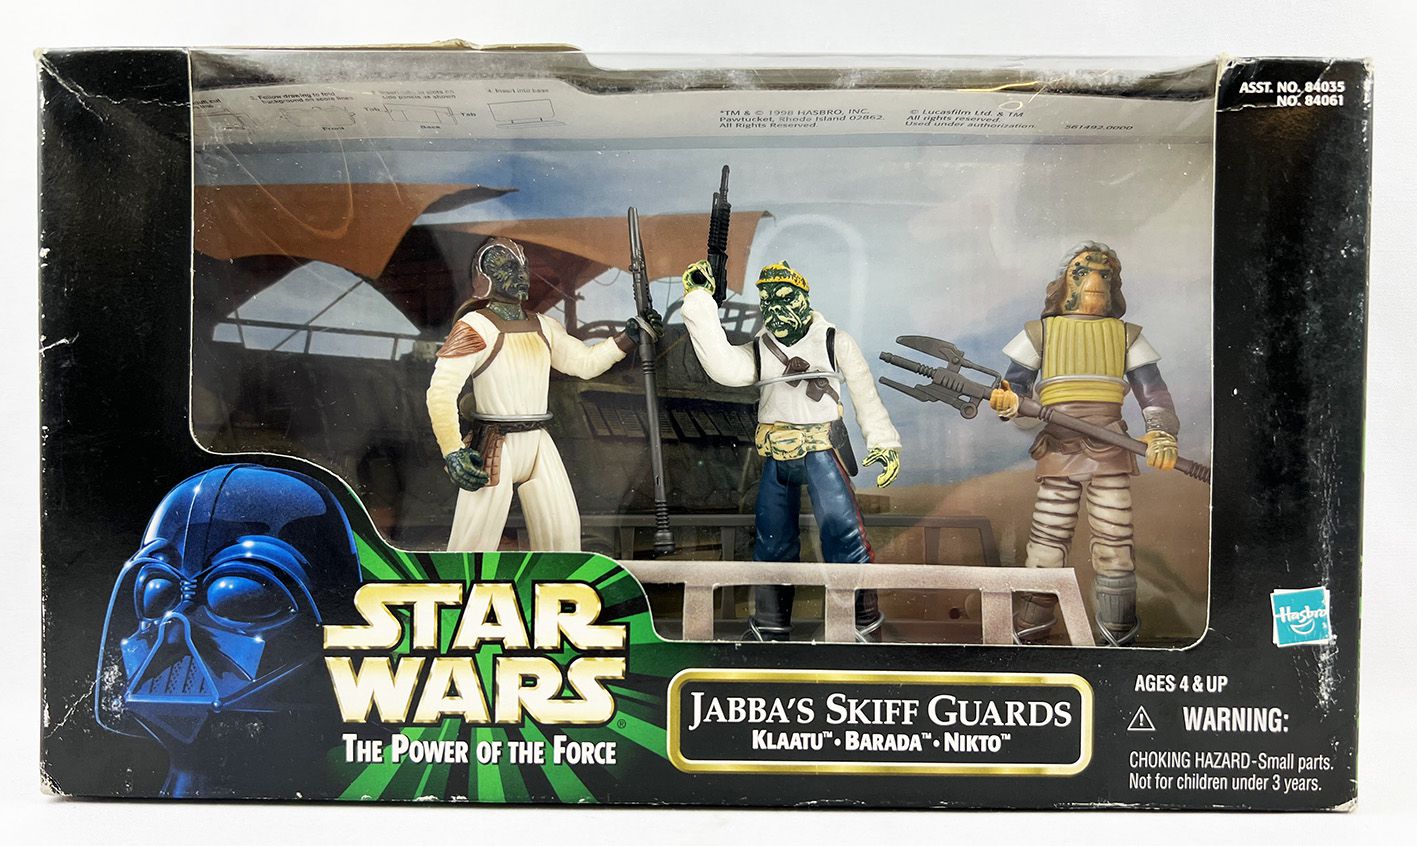 Jabbas Skiff Guards Klaatu Barbada Nikto Action Figure for sale online Hasbro Star Wars Power of the Force 